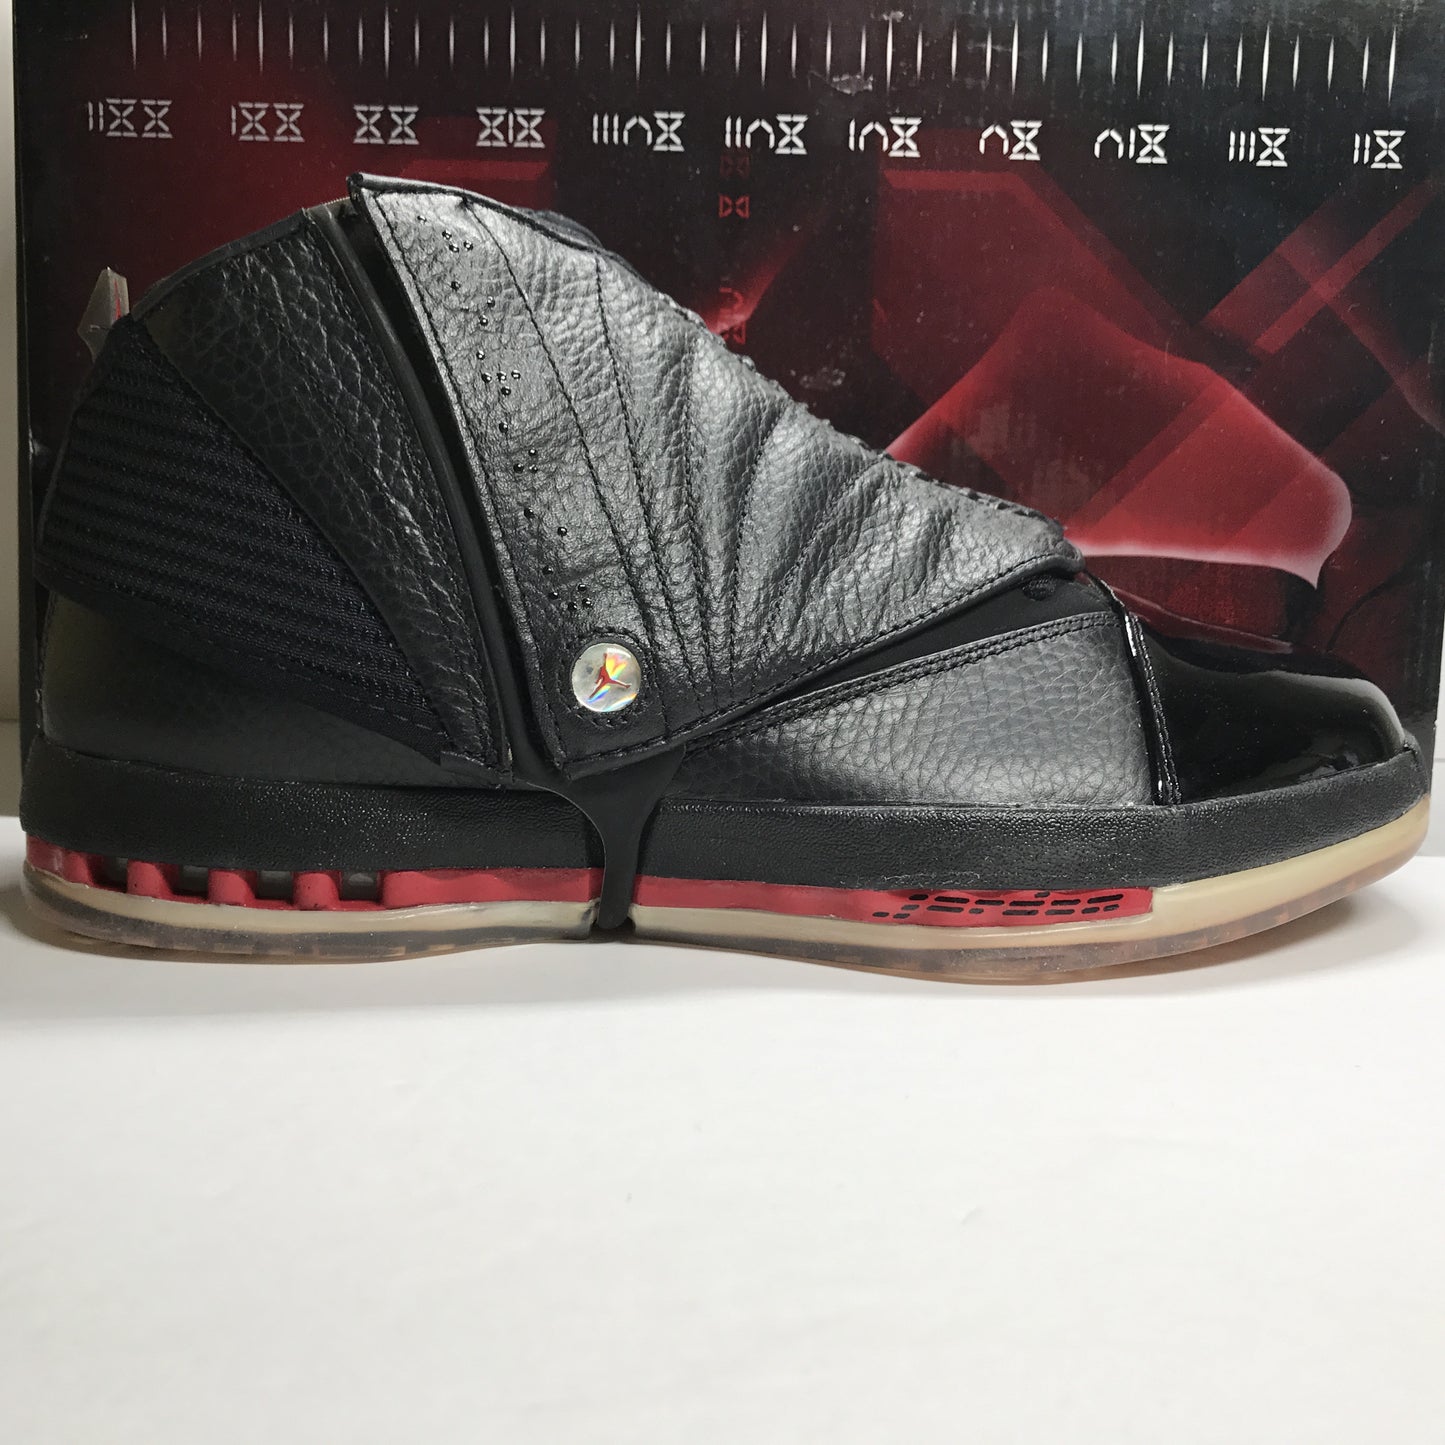 DS Nike Air Jordan 16 XVI CDP Bred Size 8